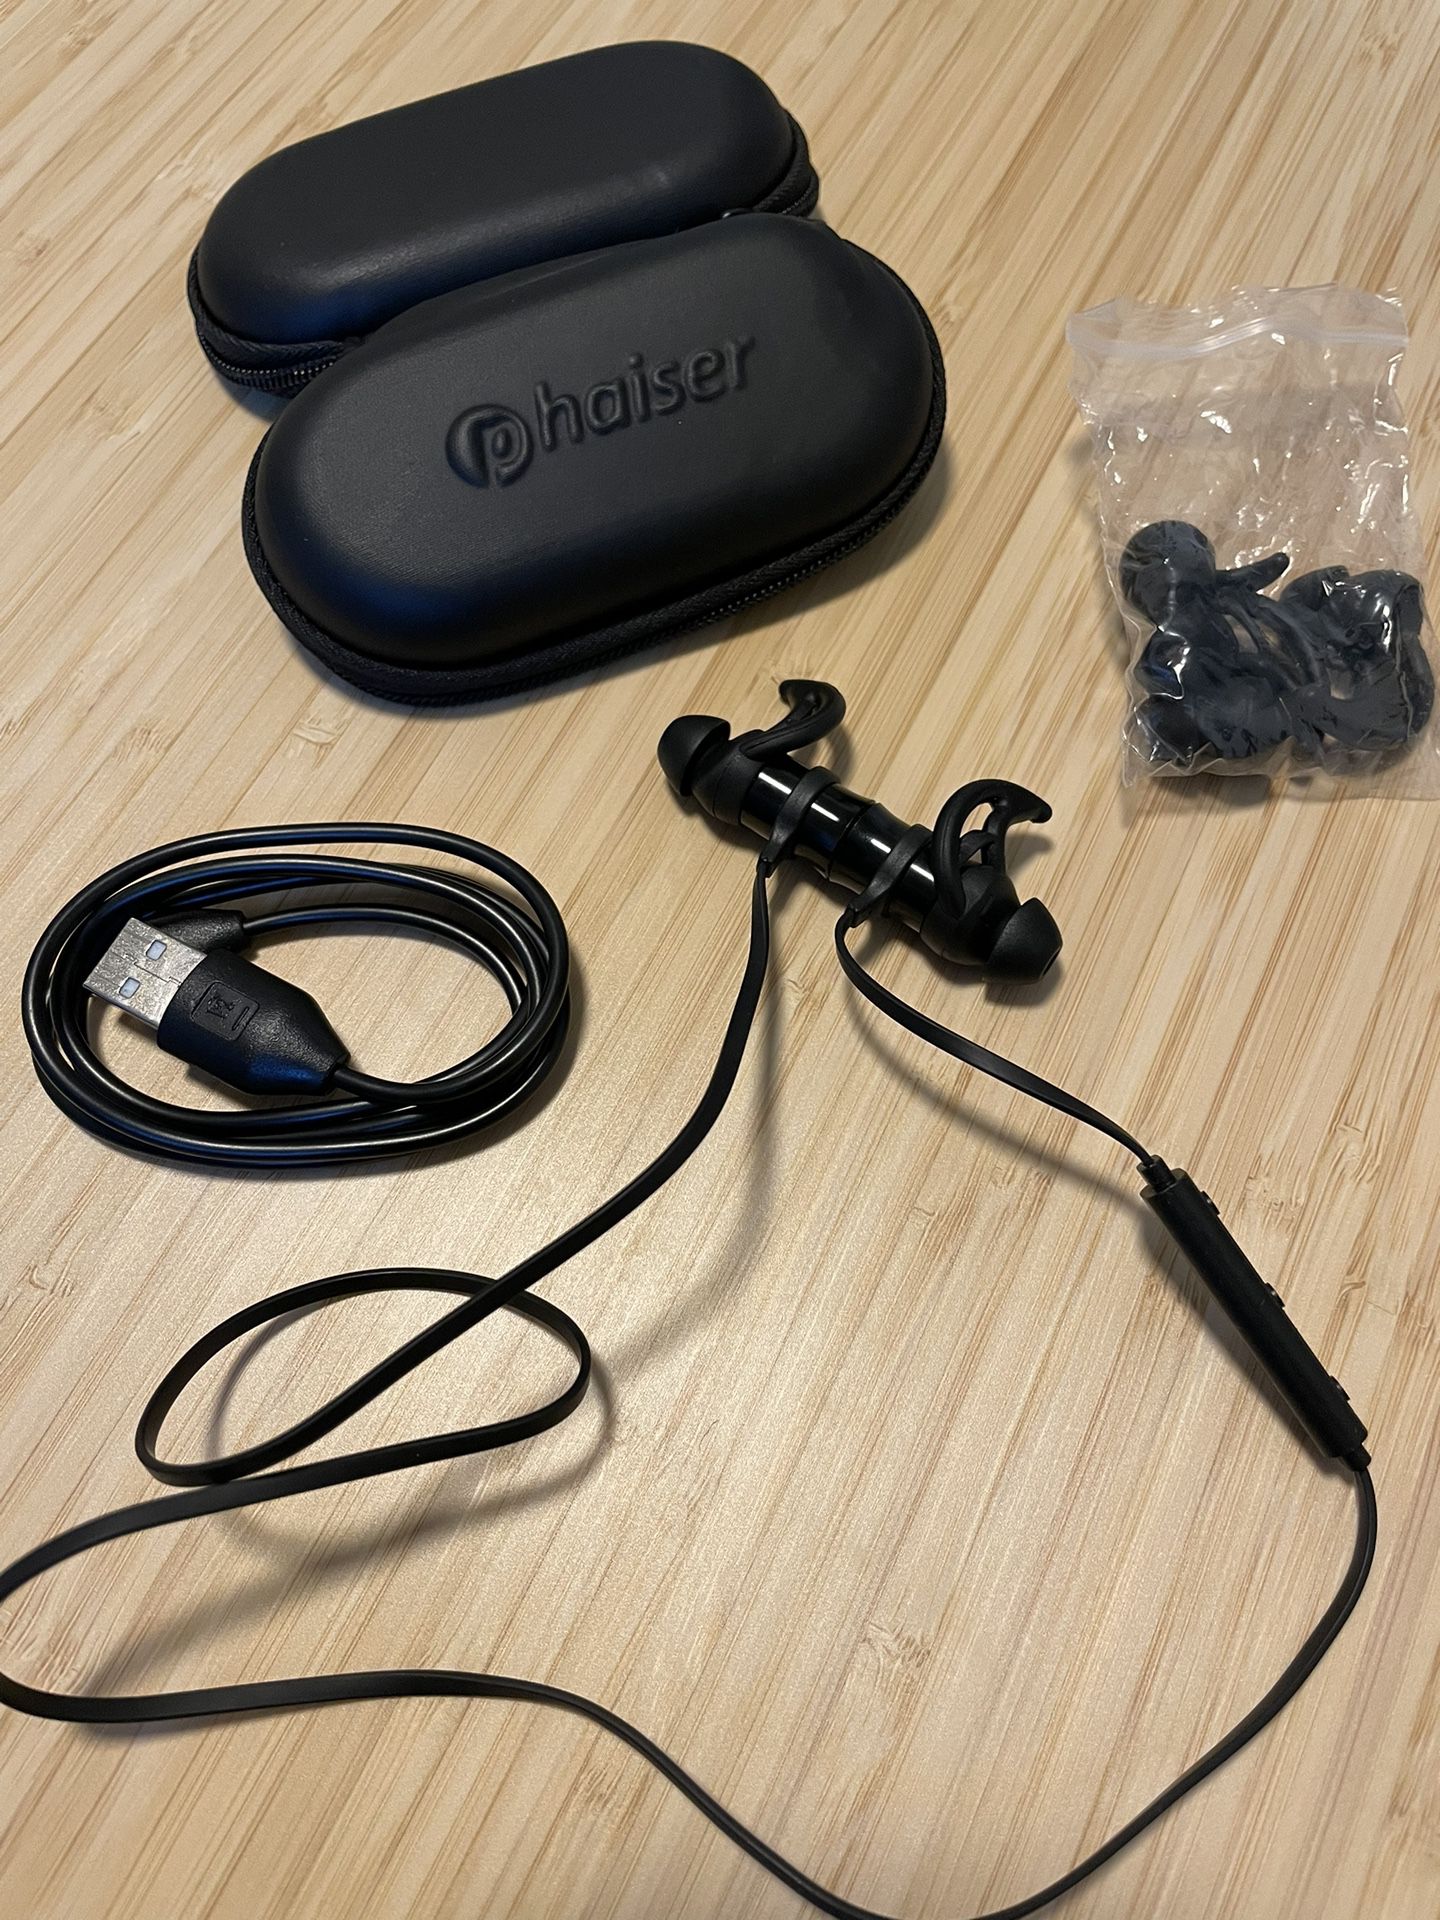 phaiser headphones 